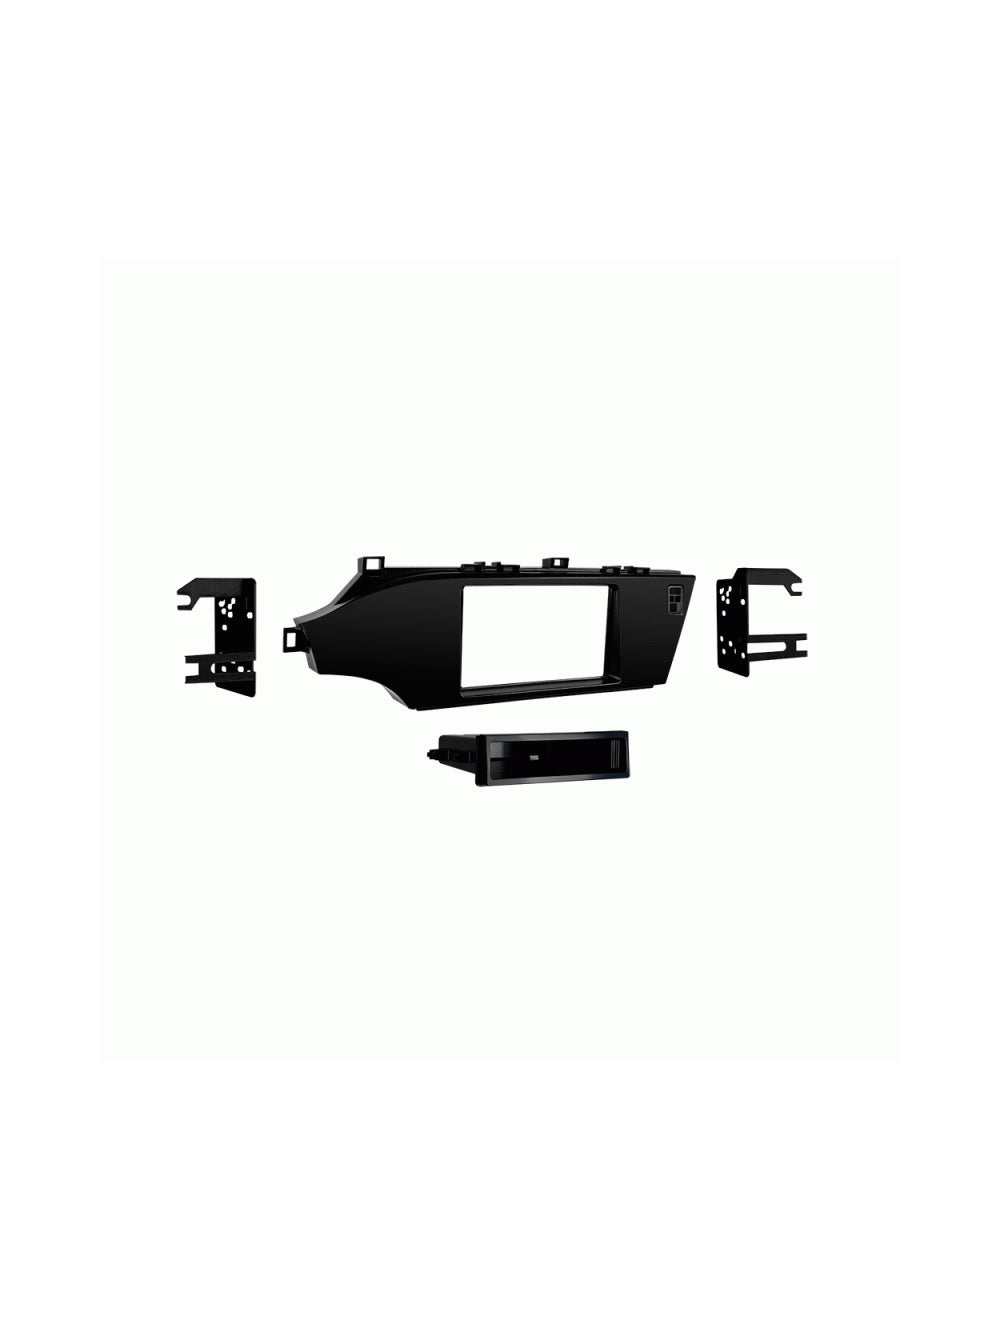 Metra 99-8244HG Single DIN Dash Kit for 2013-Up Toyota Avalon Black